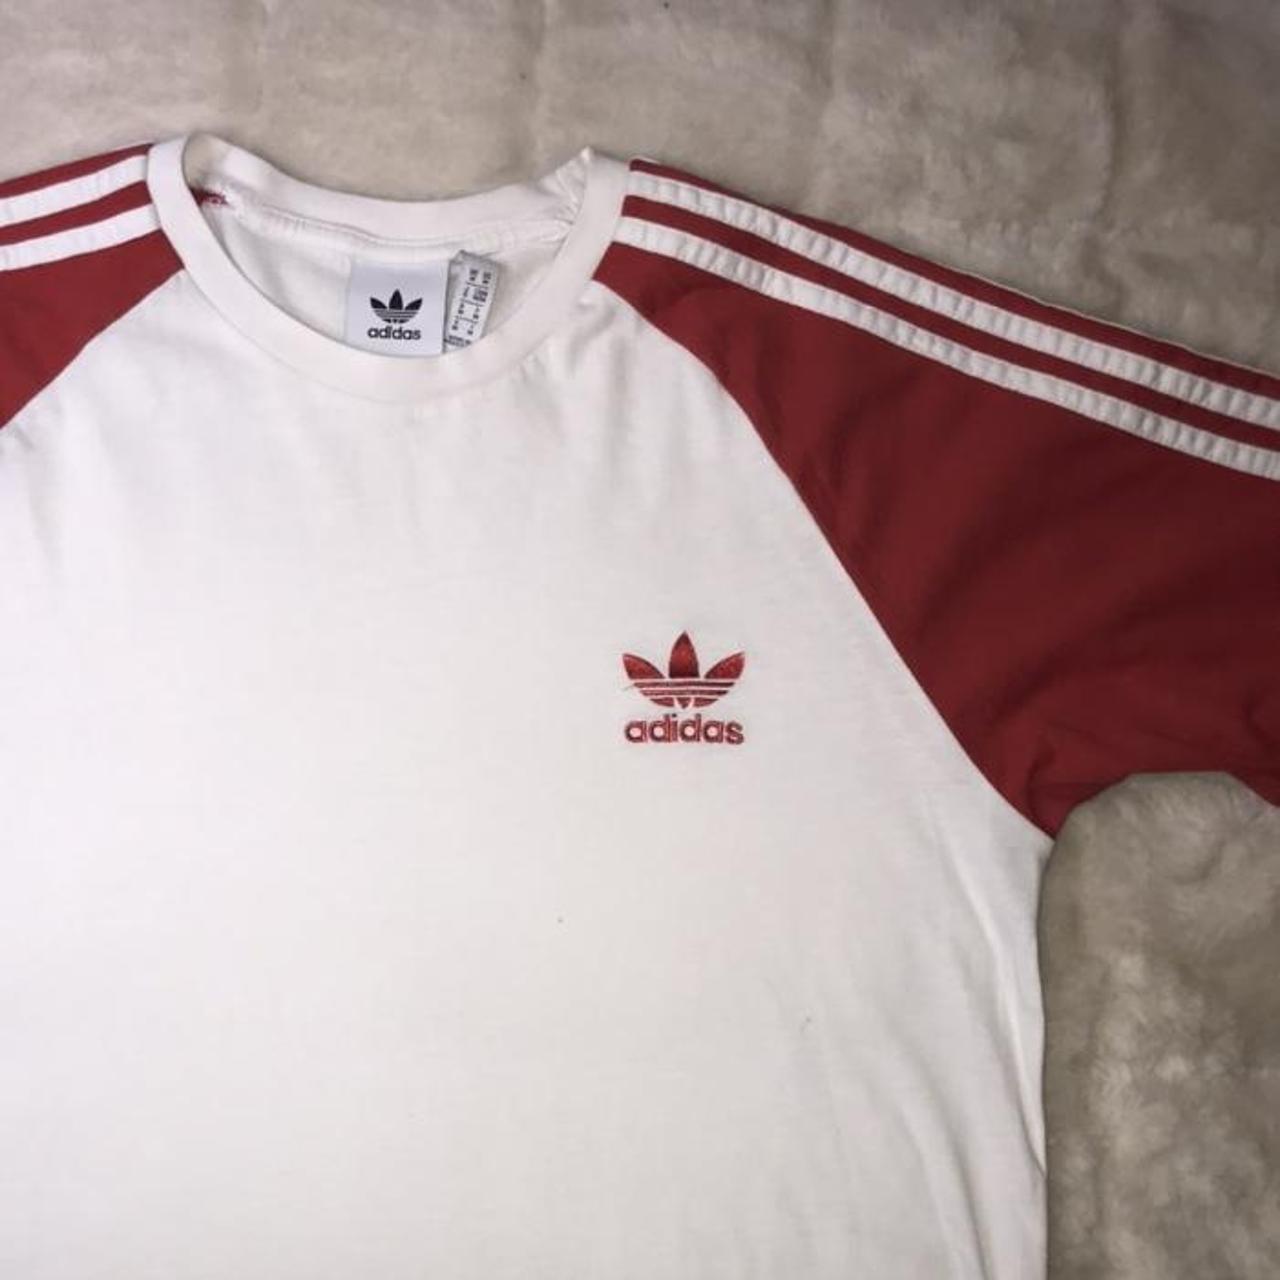 Adidas Originals | White & Red | T-Shirt | Medium... - Depop